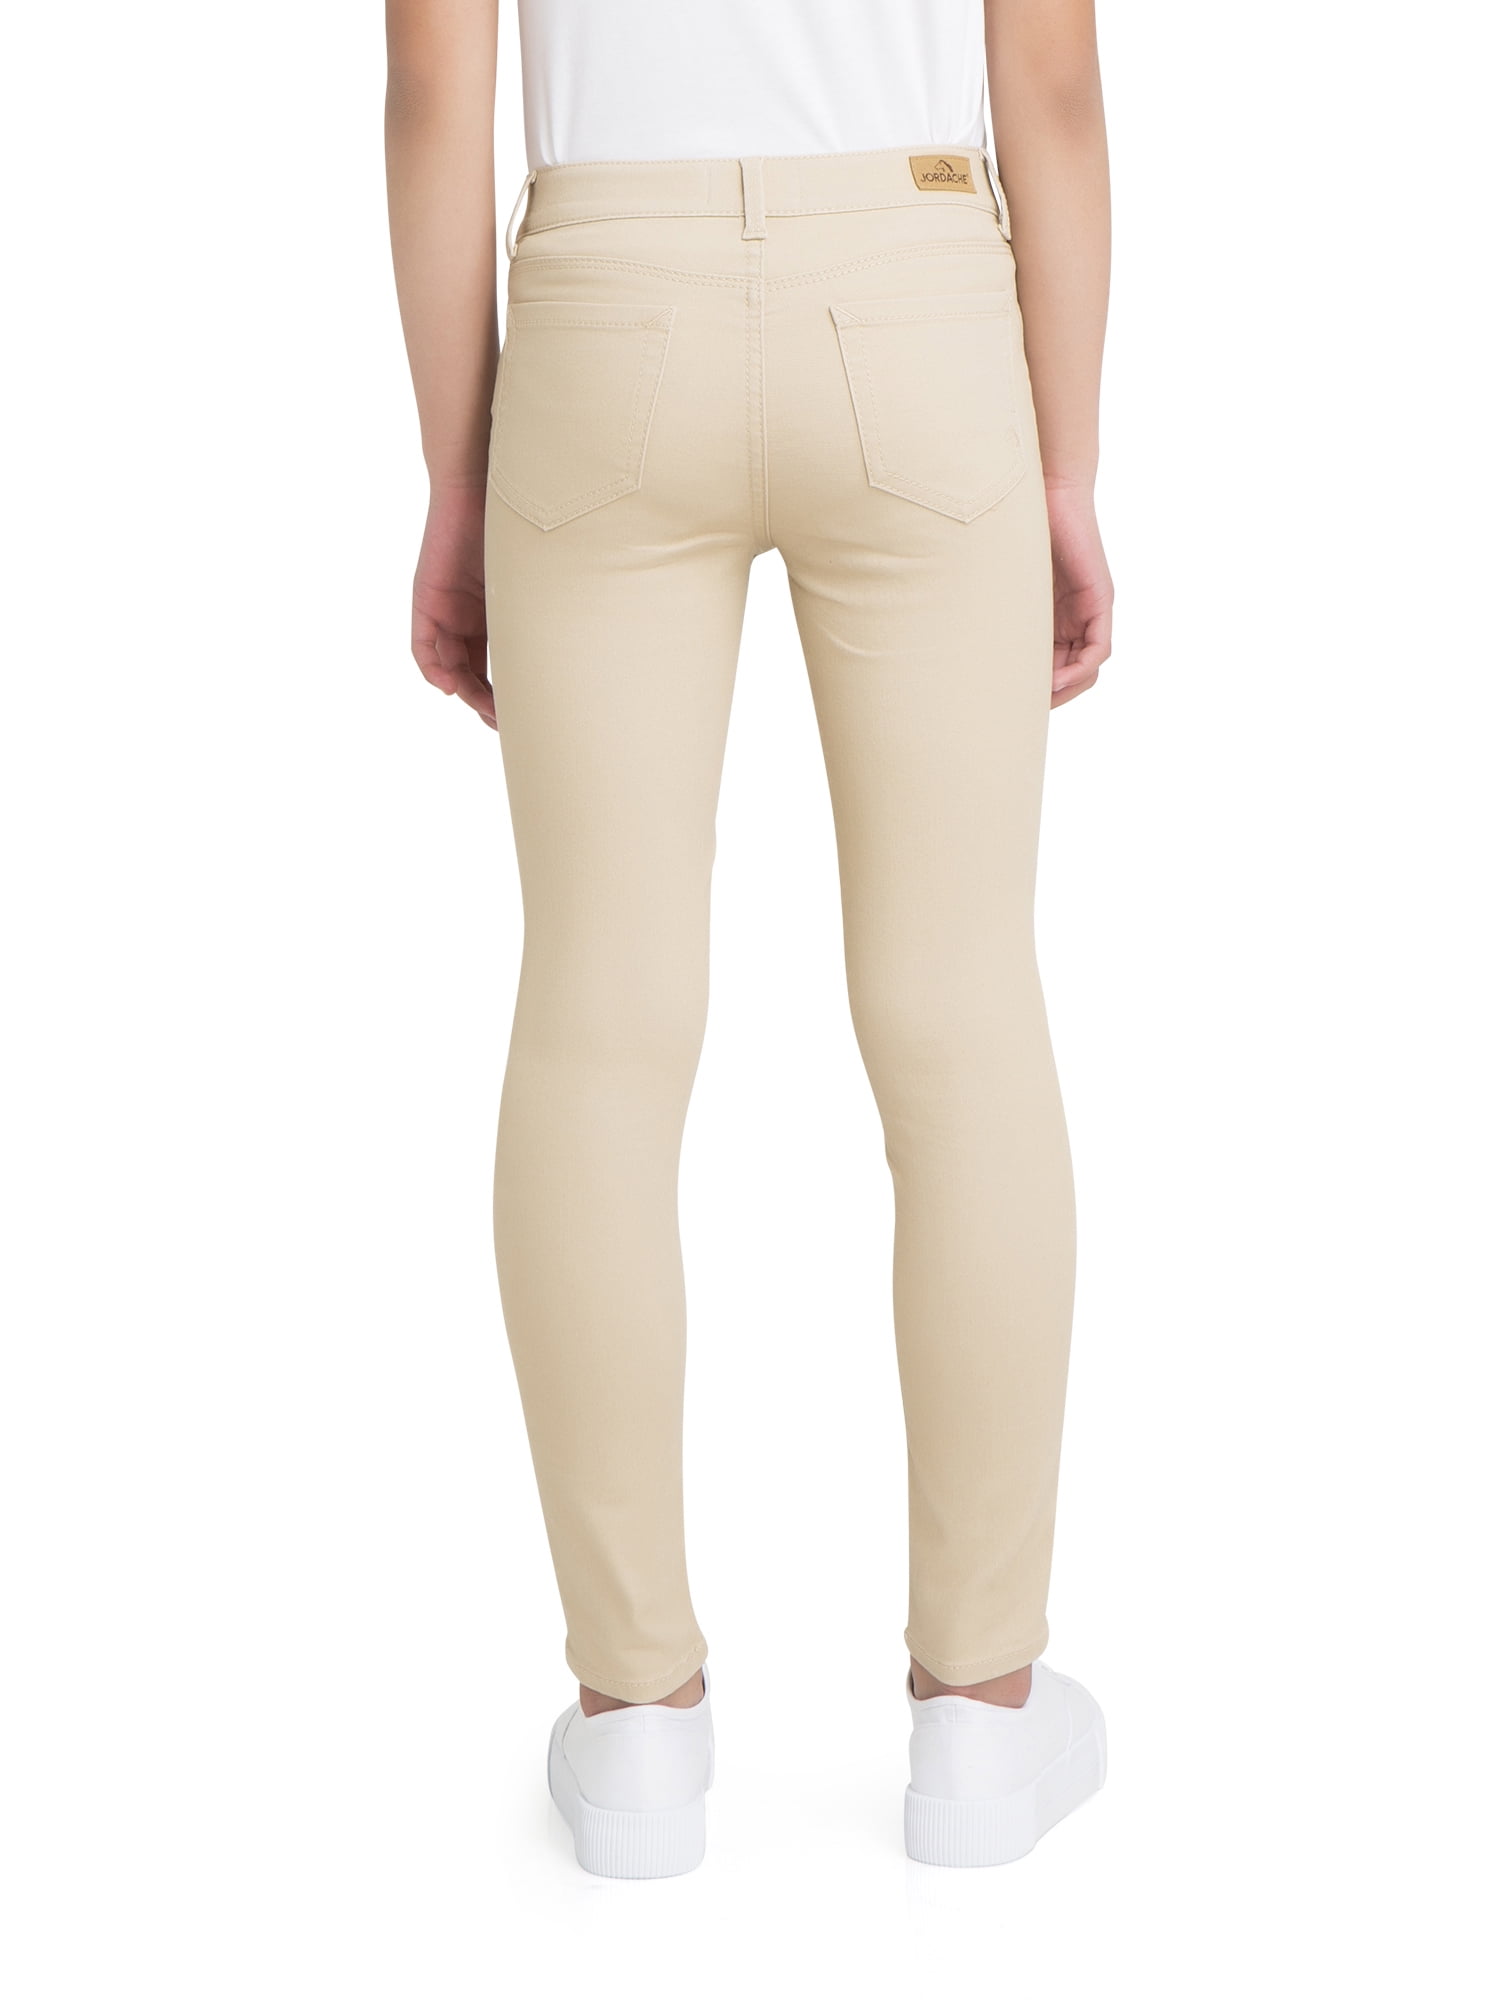 Girls Super Skinny Jeans, Sizes 5-18 - Walmart.com